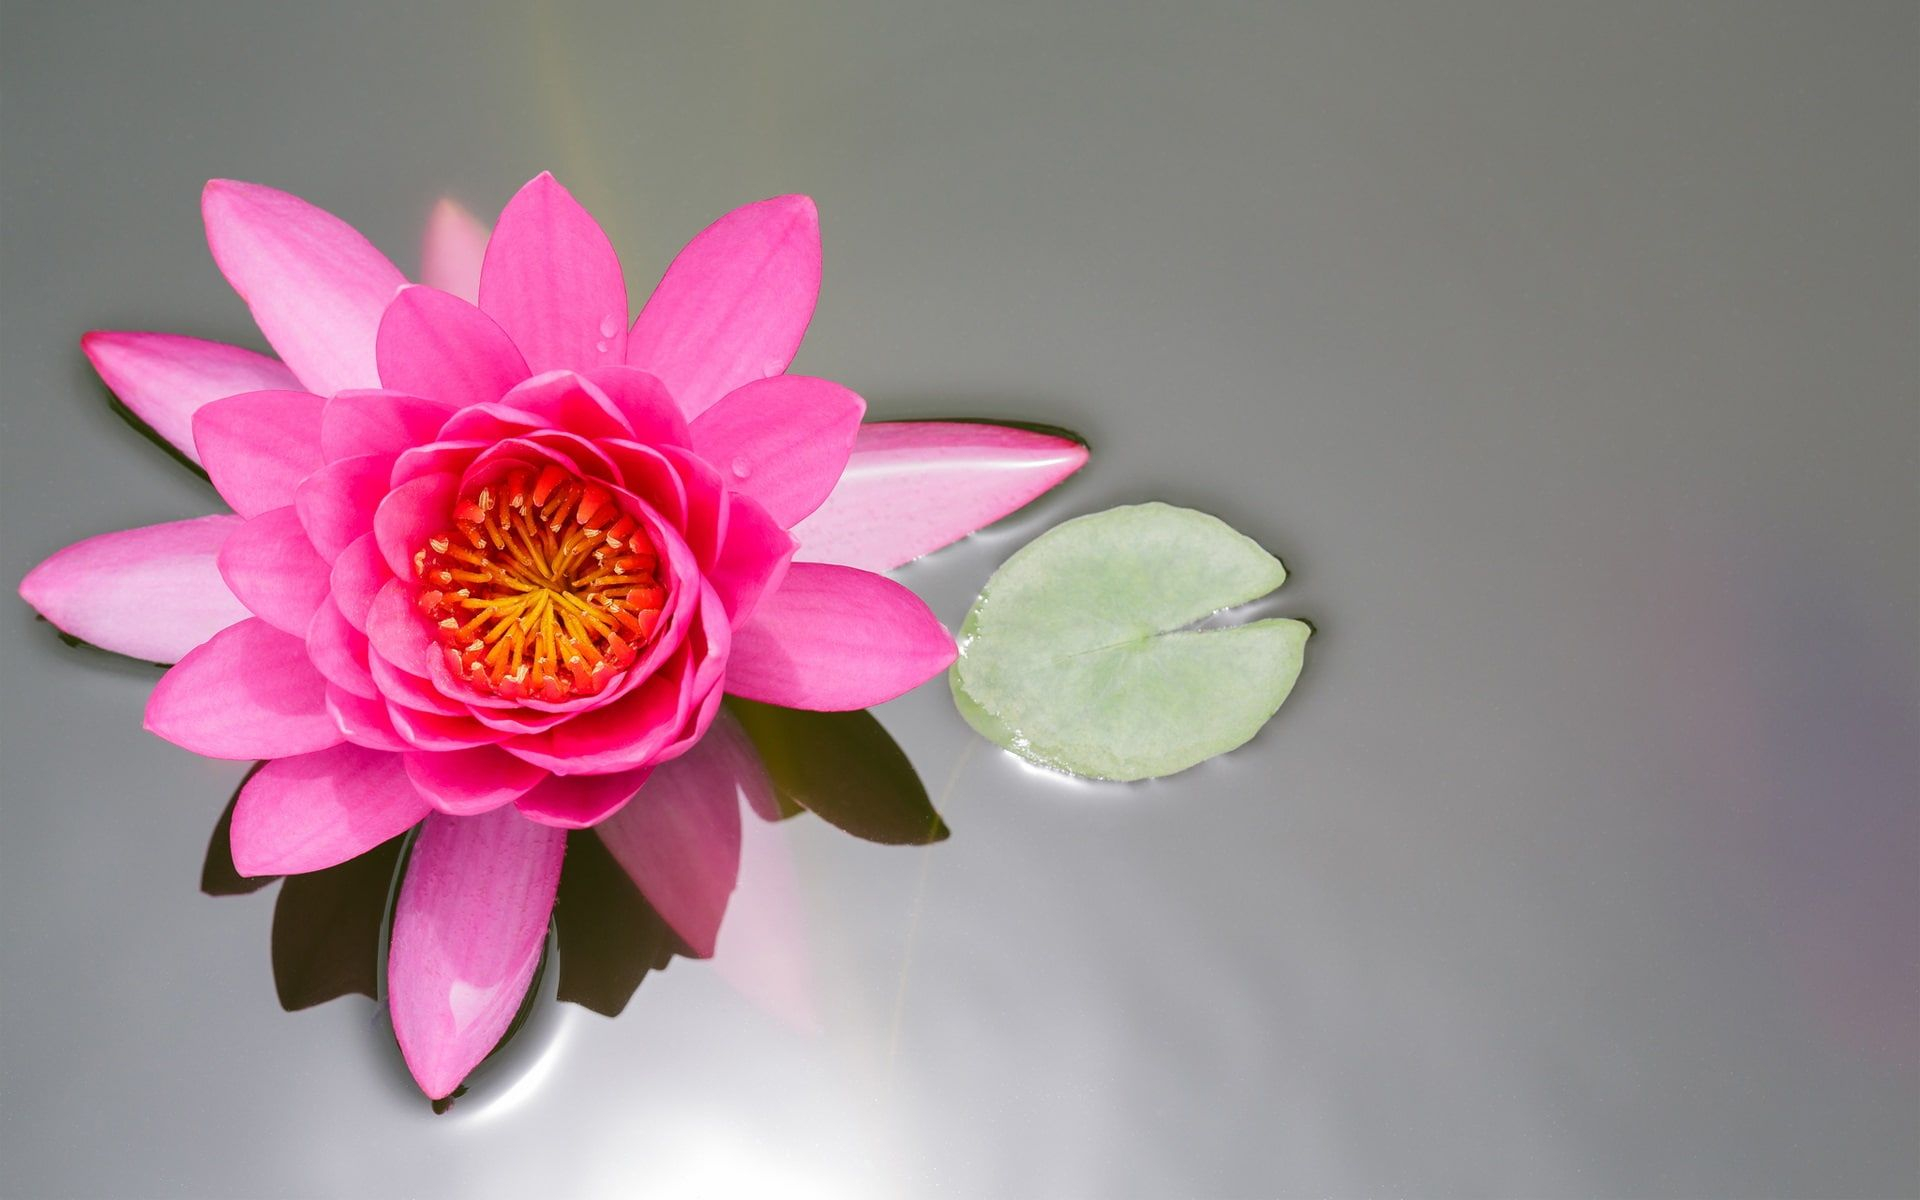 1920x1200 Pink flower, lotus, pond, water lily, leaf #Pink #Flower #Lotus #Pond #Water #Lily #Leaf #1080P #wallpaper #hdwallpaper #desktop | Water lily, Lily, Pink flowers